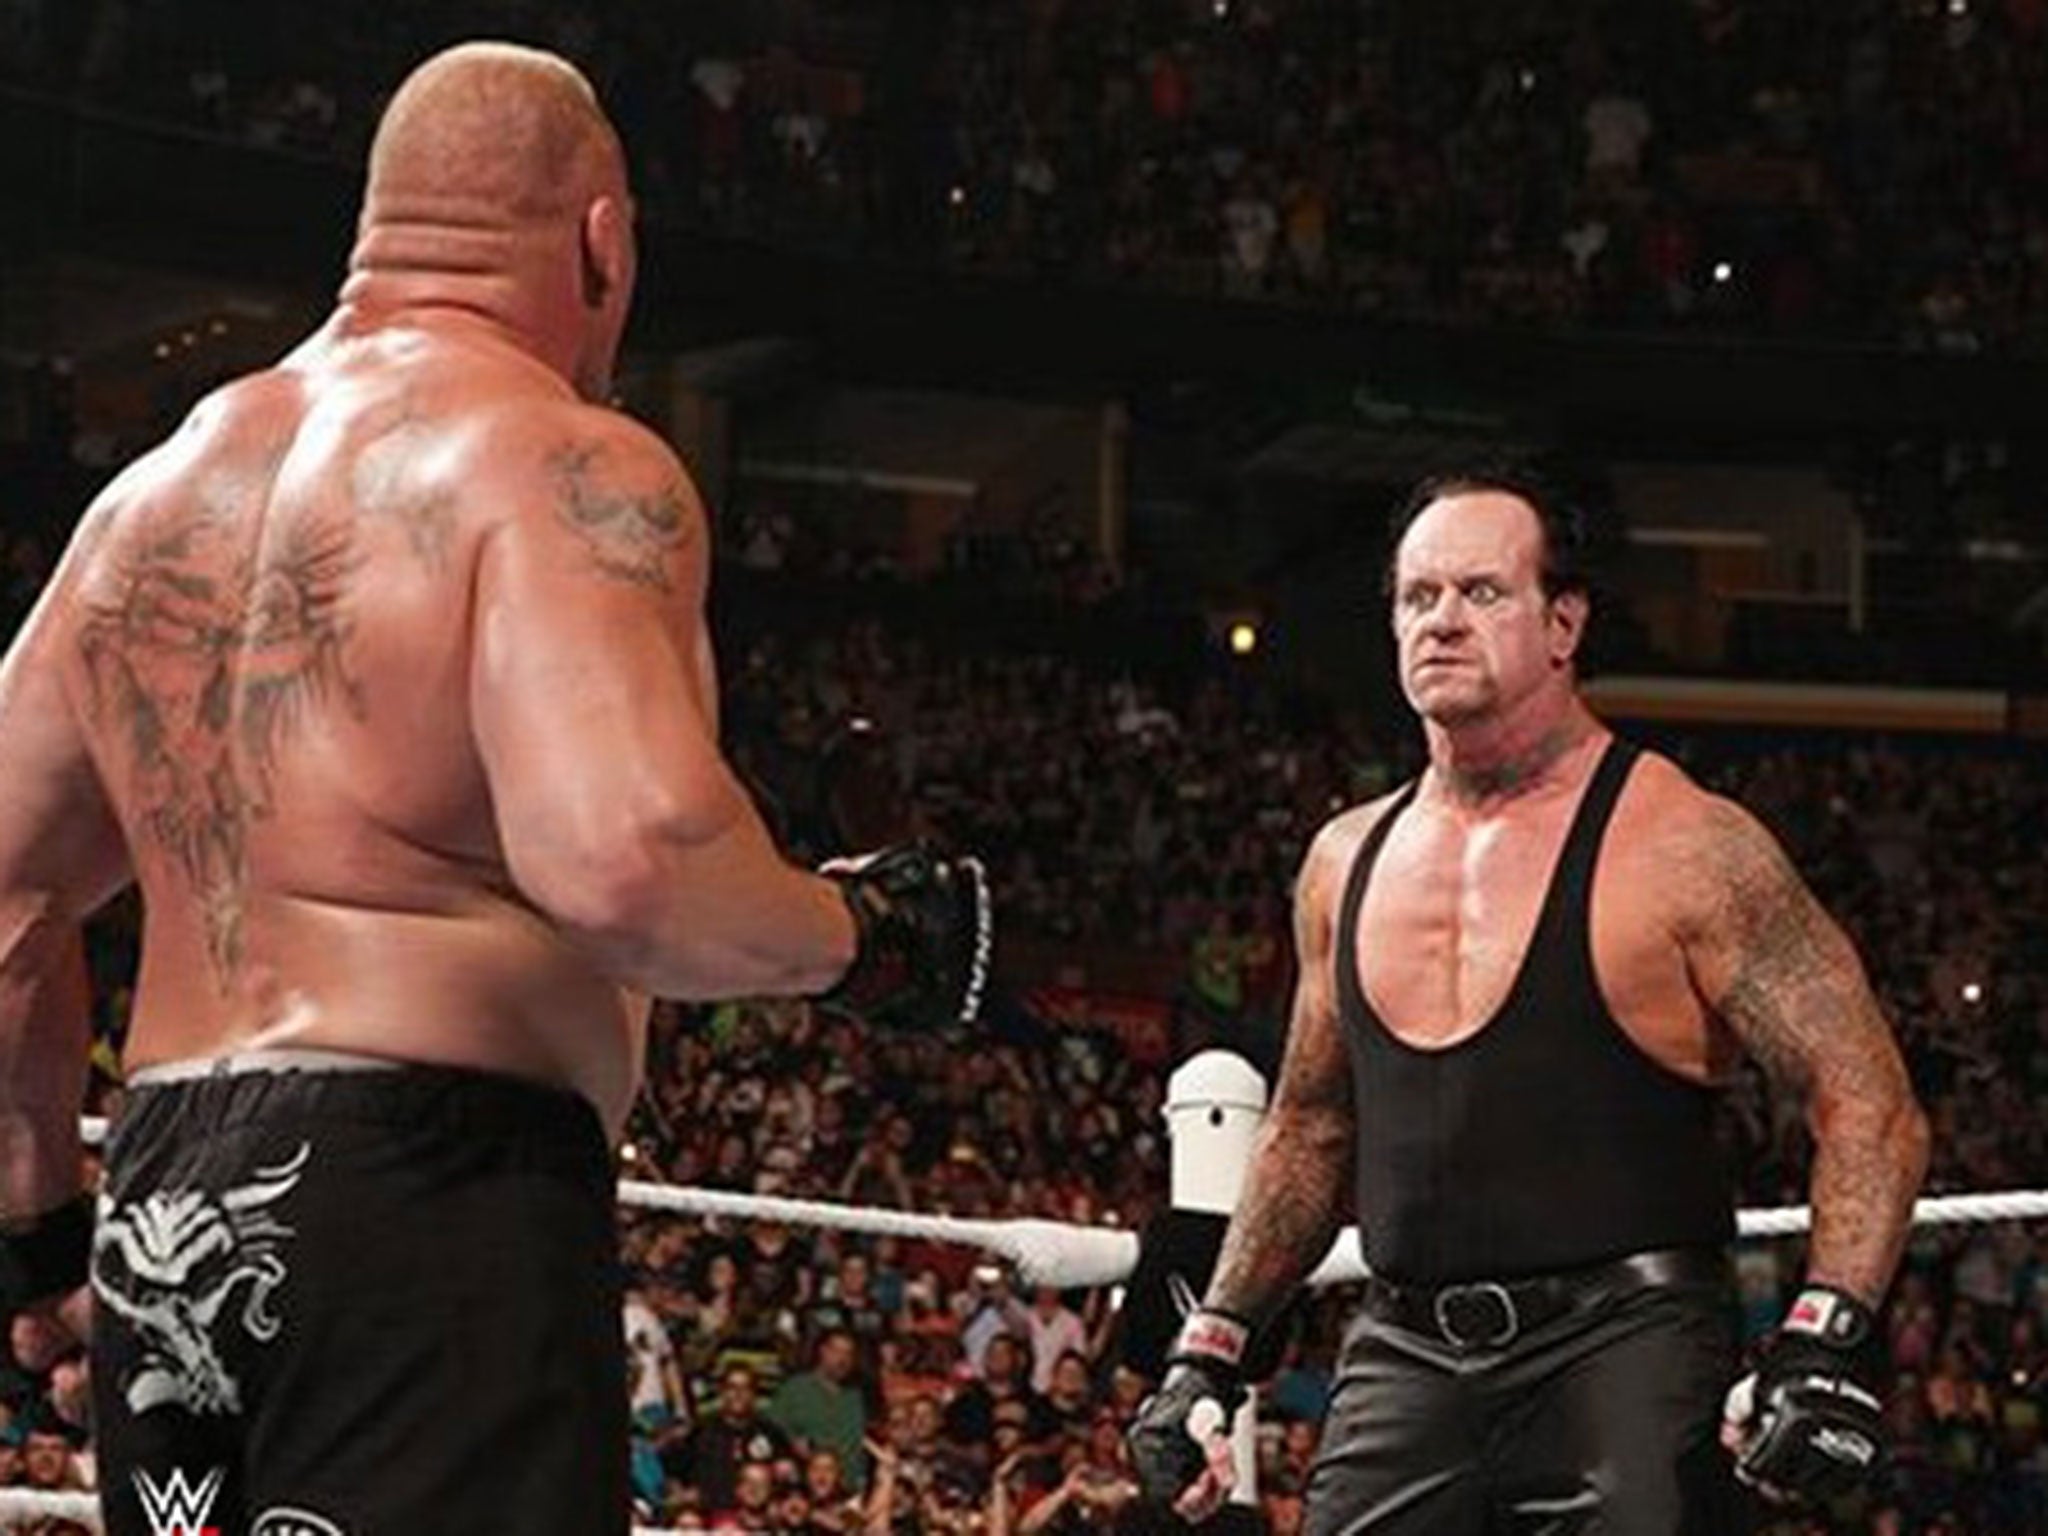 The Undertaker stares down Brock Lesnar